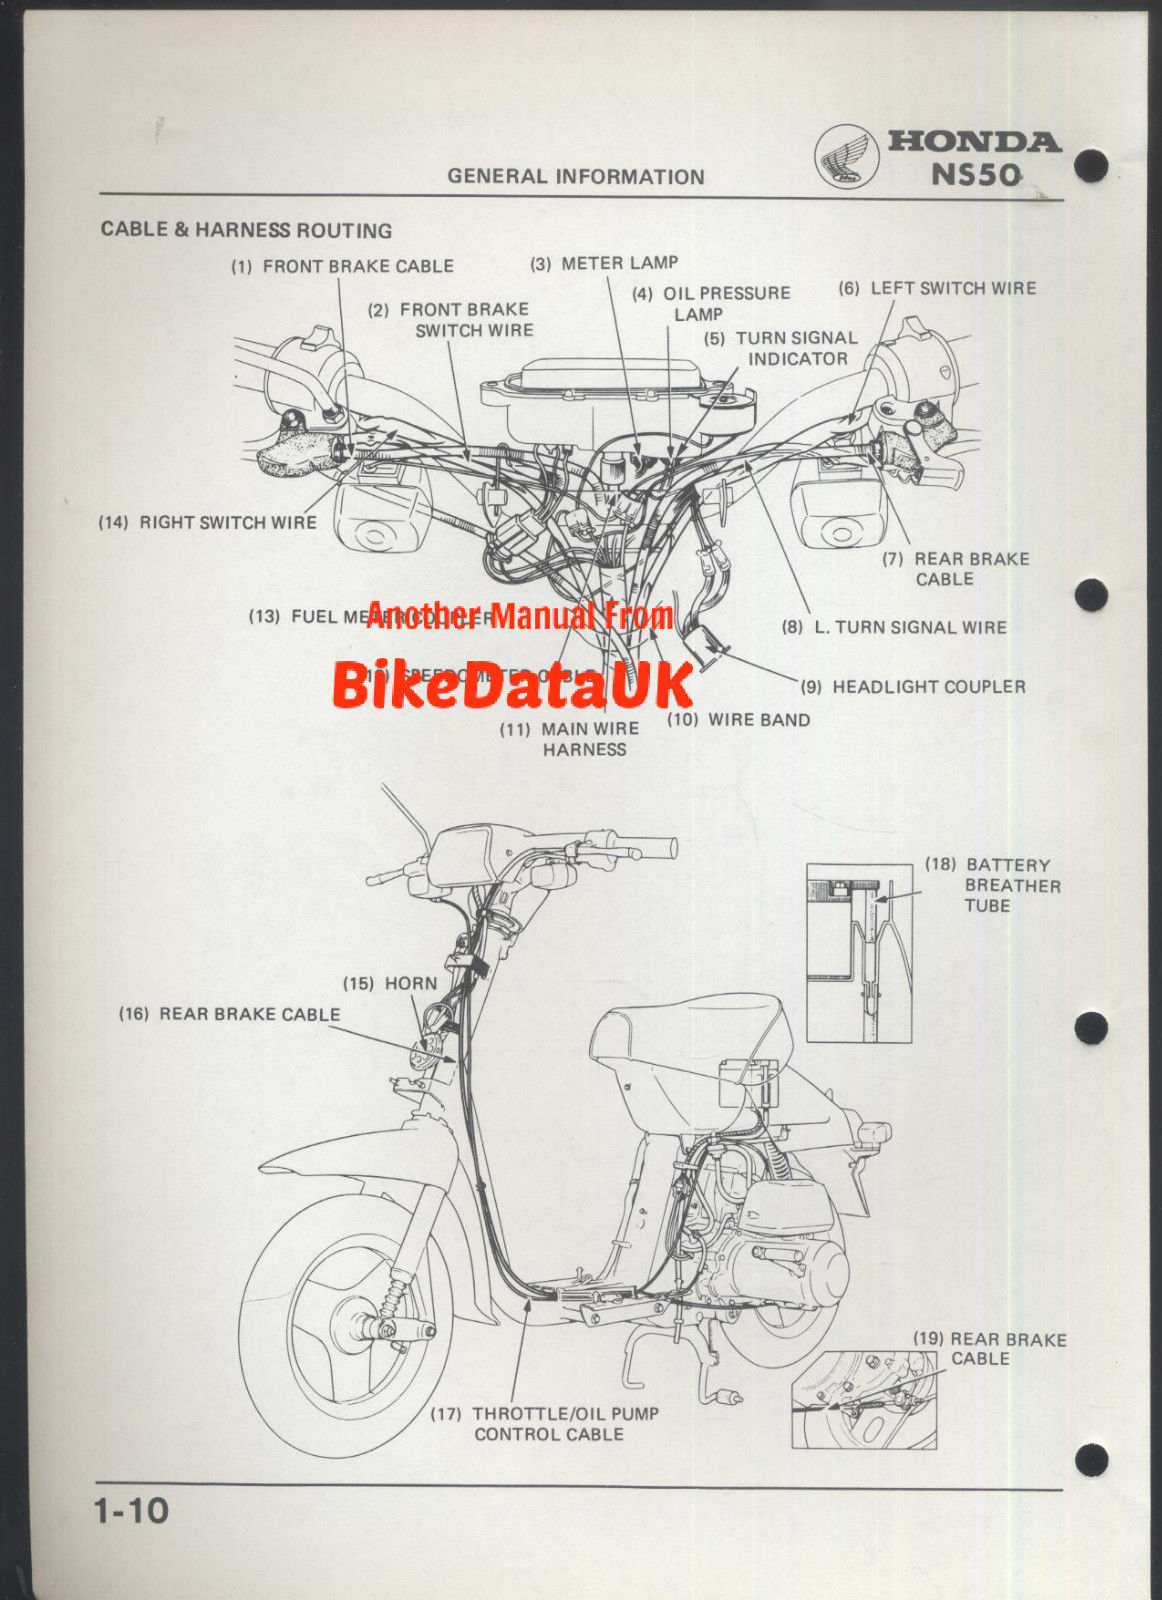 Руководство для скутера Honda Tact 30 модификации SZ50ST